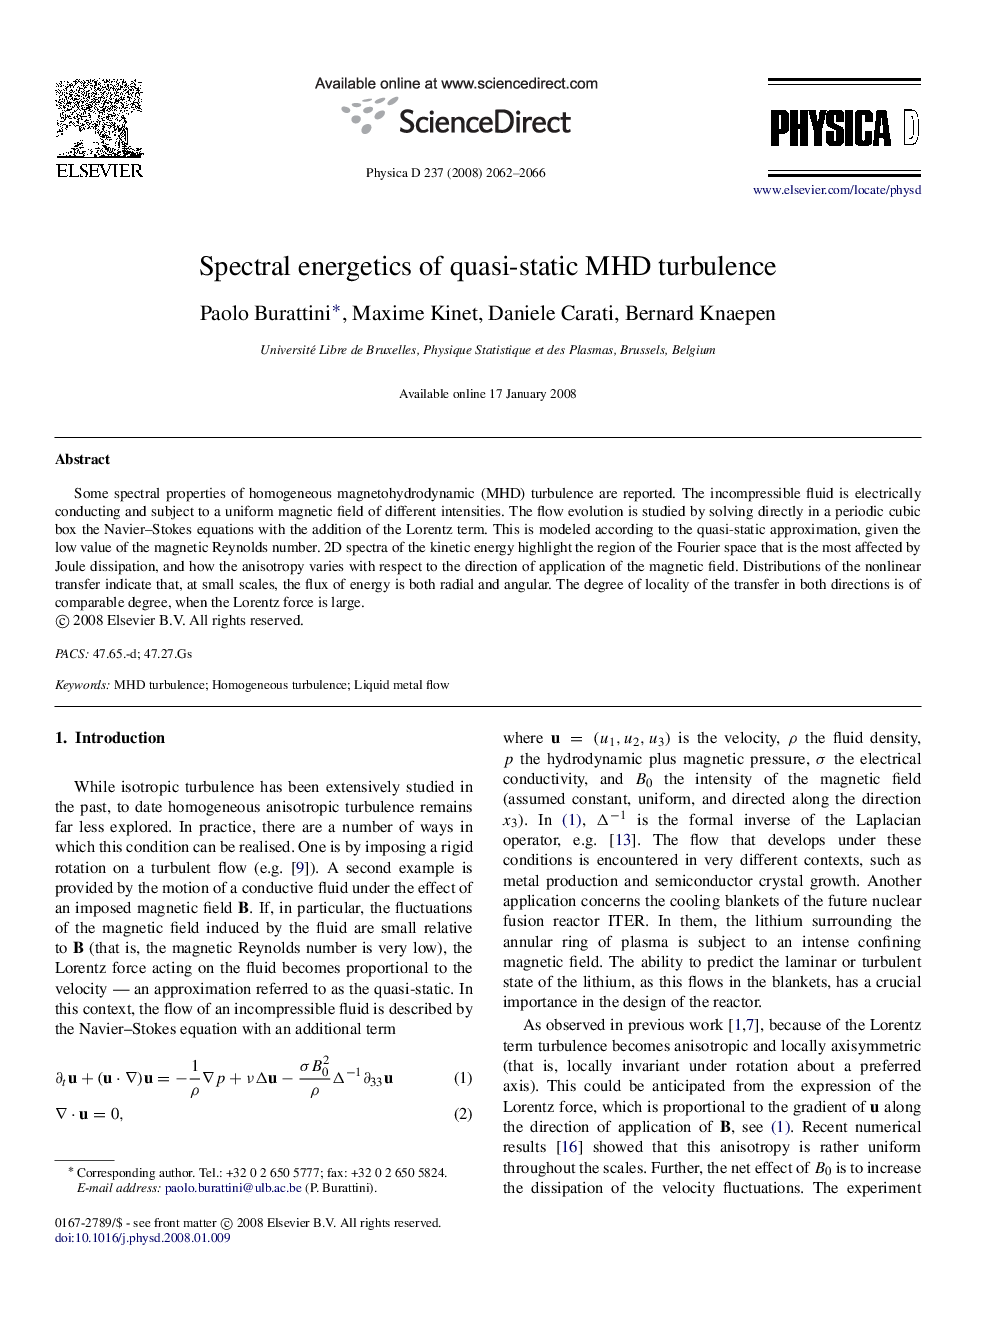 Spectral energetics of quasi-static MHD turbulence